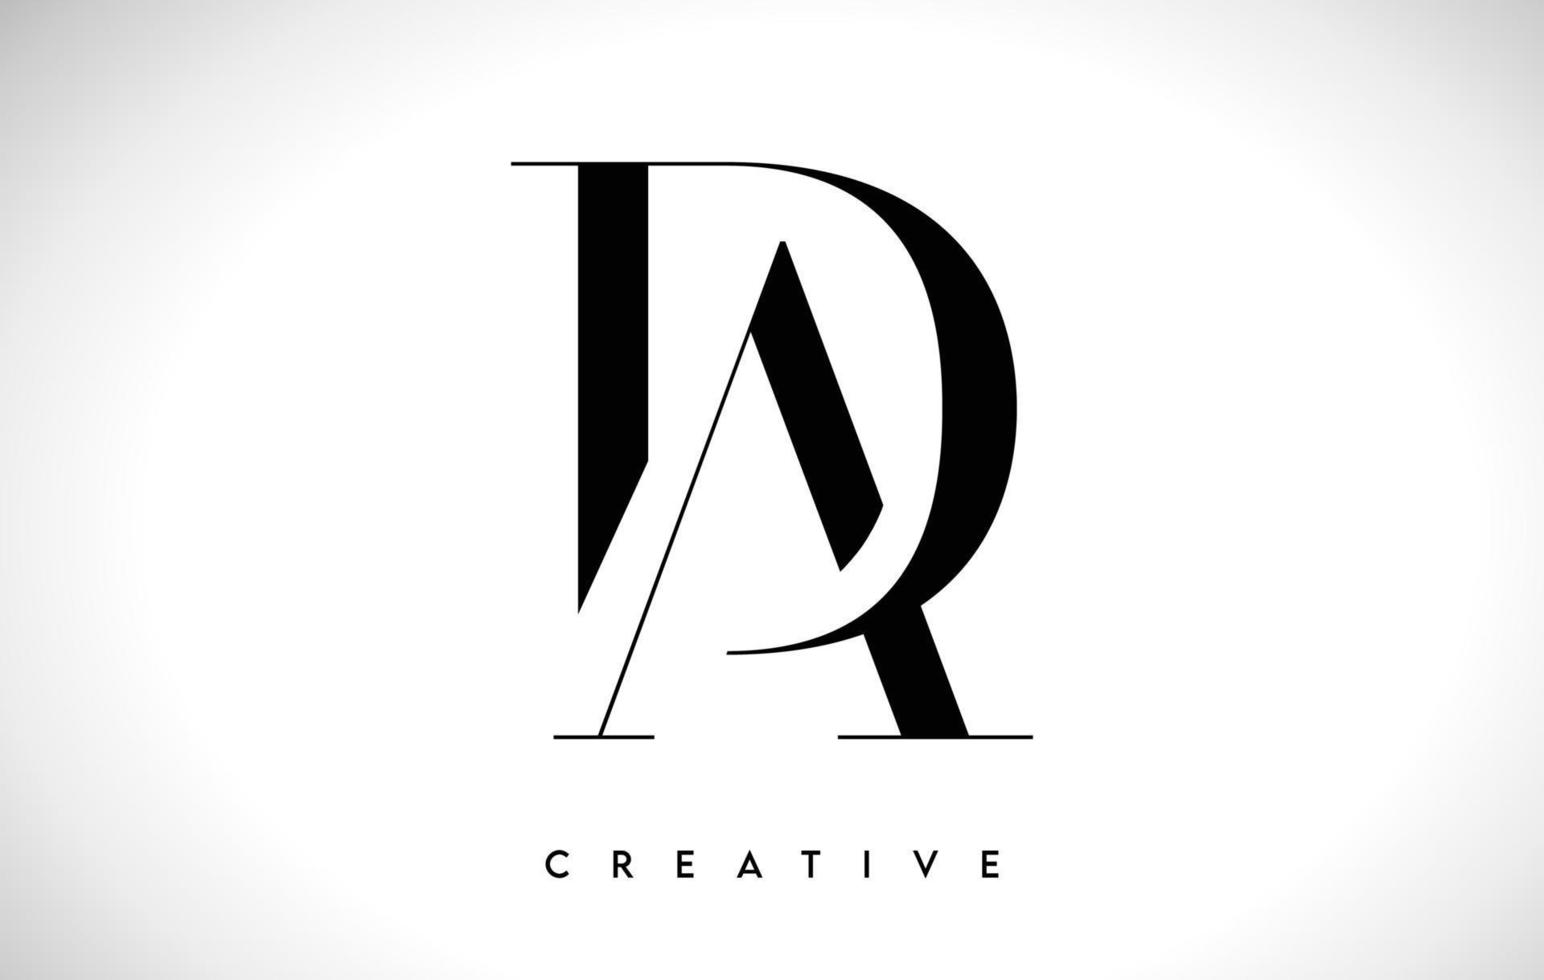 DA Artistic Letter Logo Design with Serif Font in Black and White Colors Vector Illustration